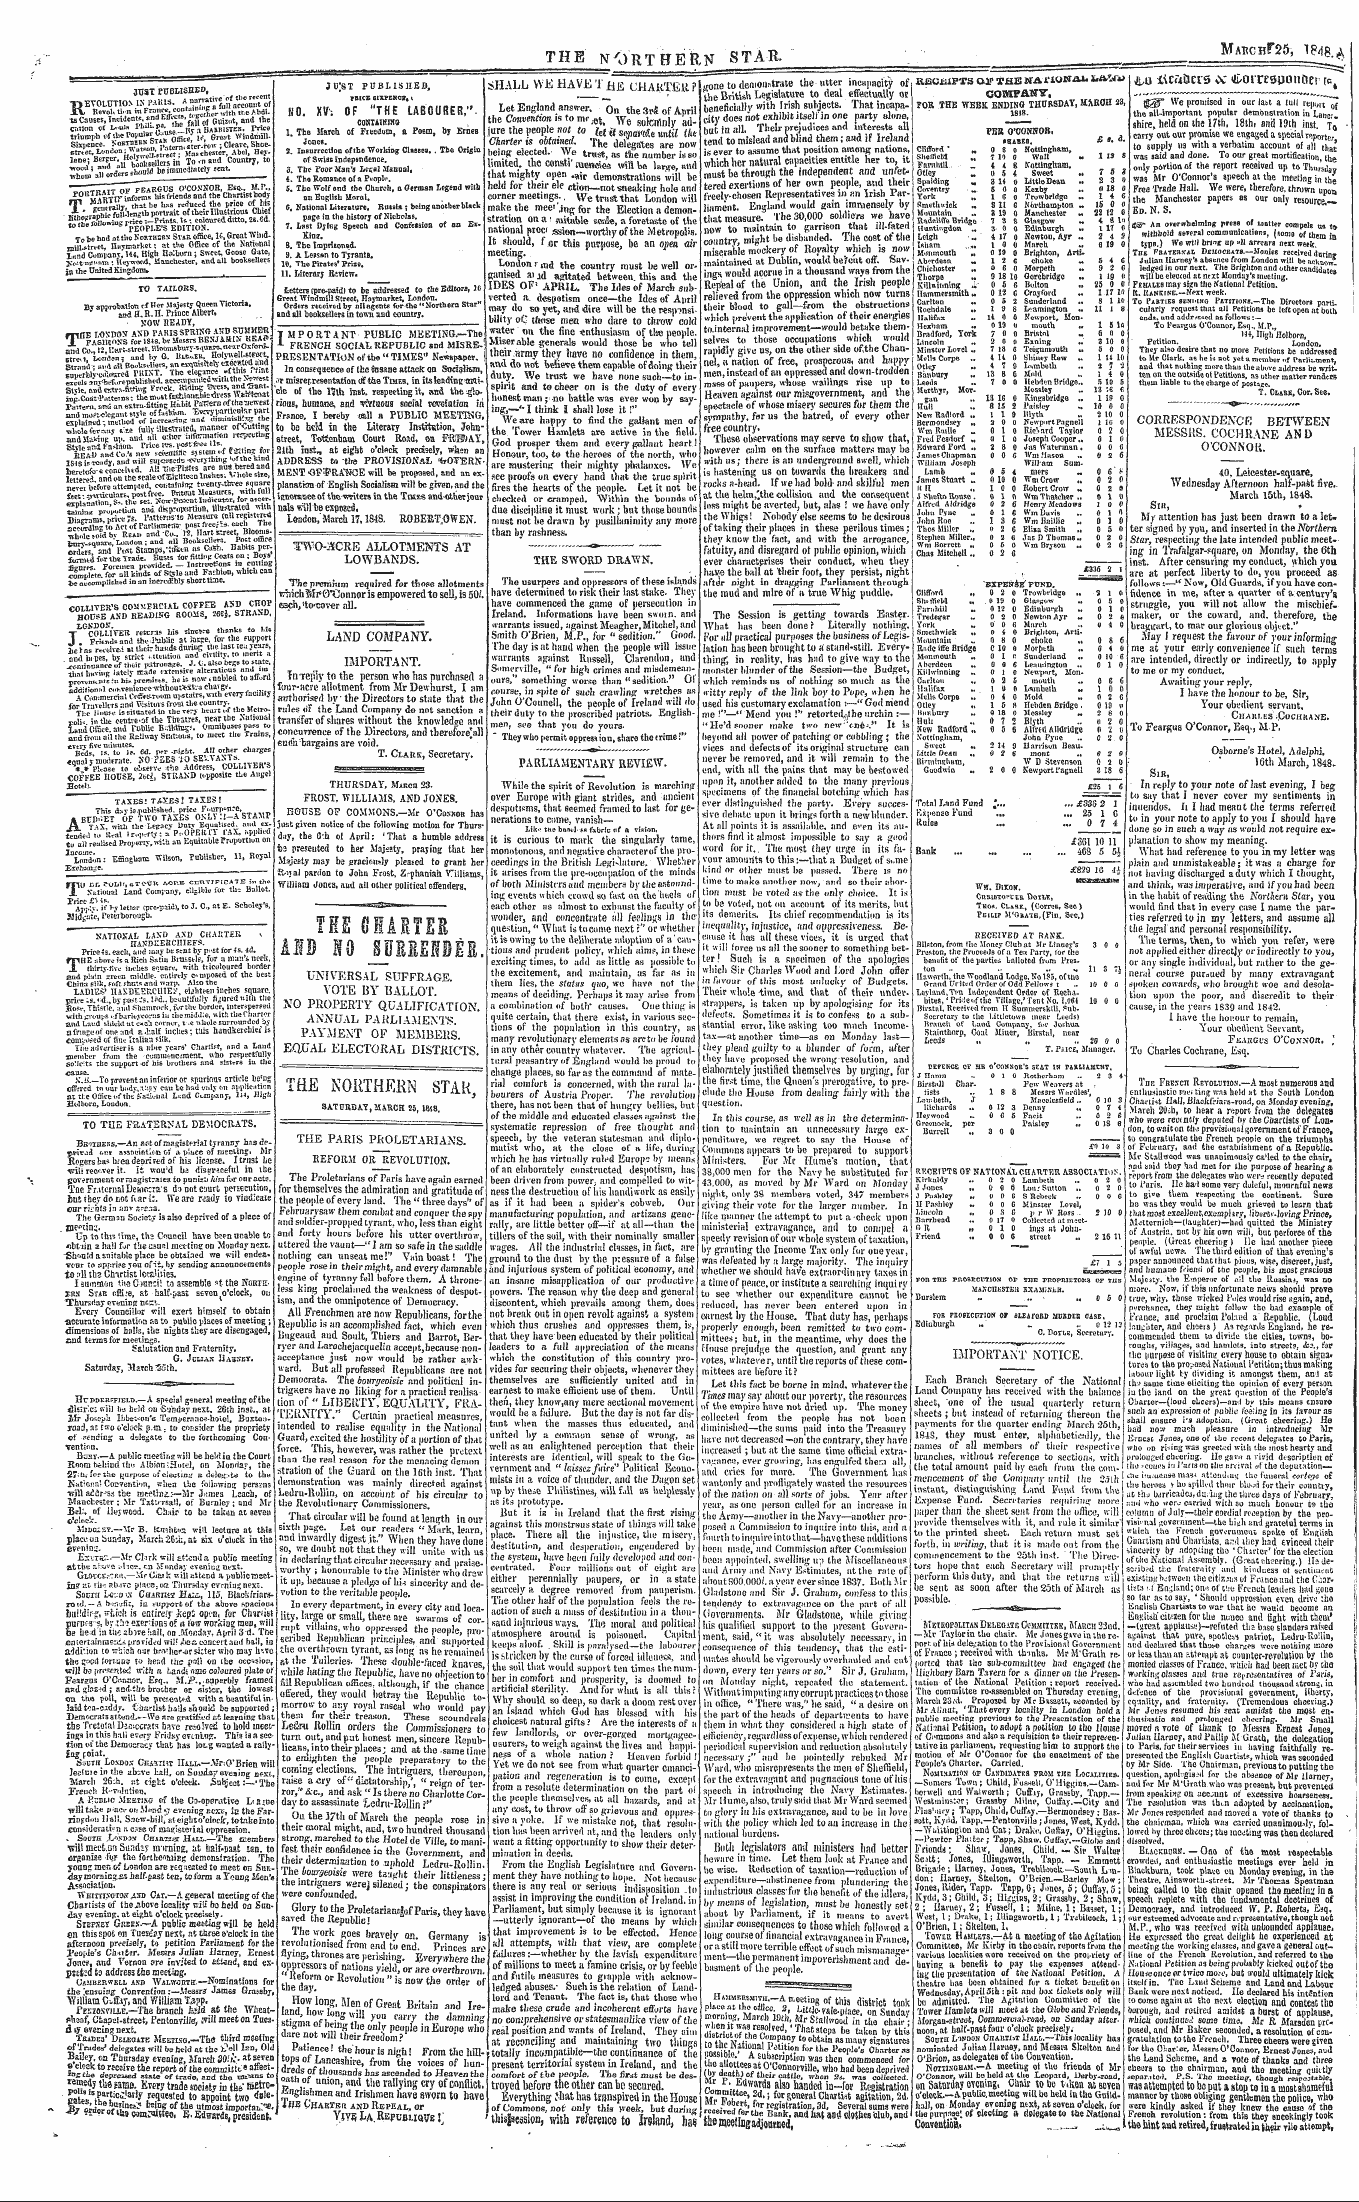 Northern Star (1837-1852): jS F Y, 3rd edition - Ad00427